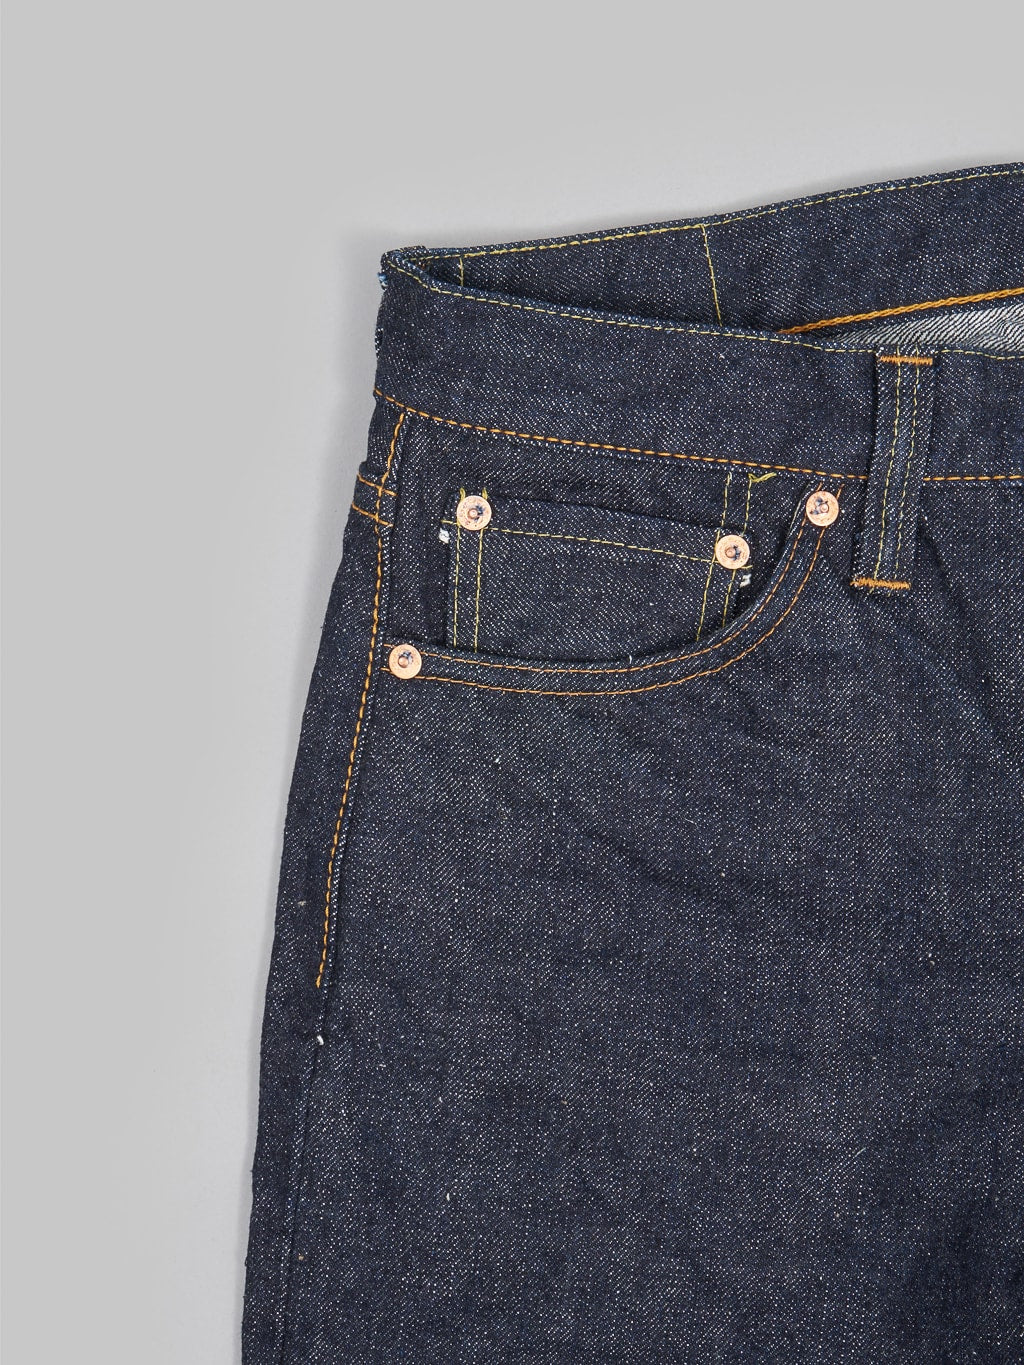 samurai s0511xxii texas cotton slim tapered jeans coin pocket